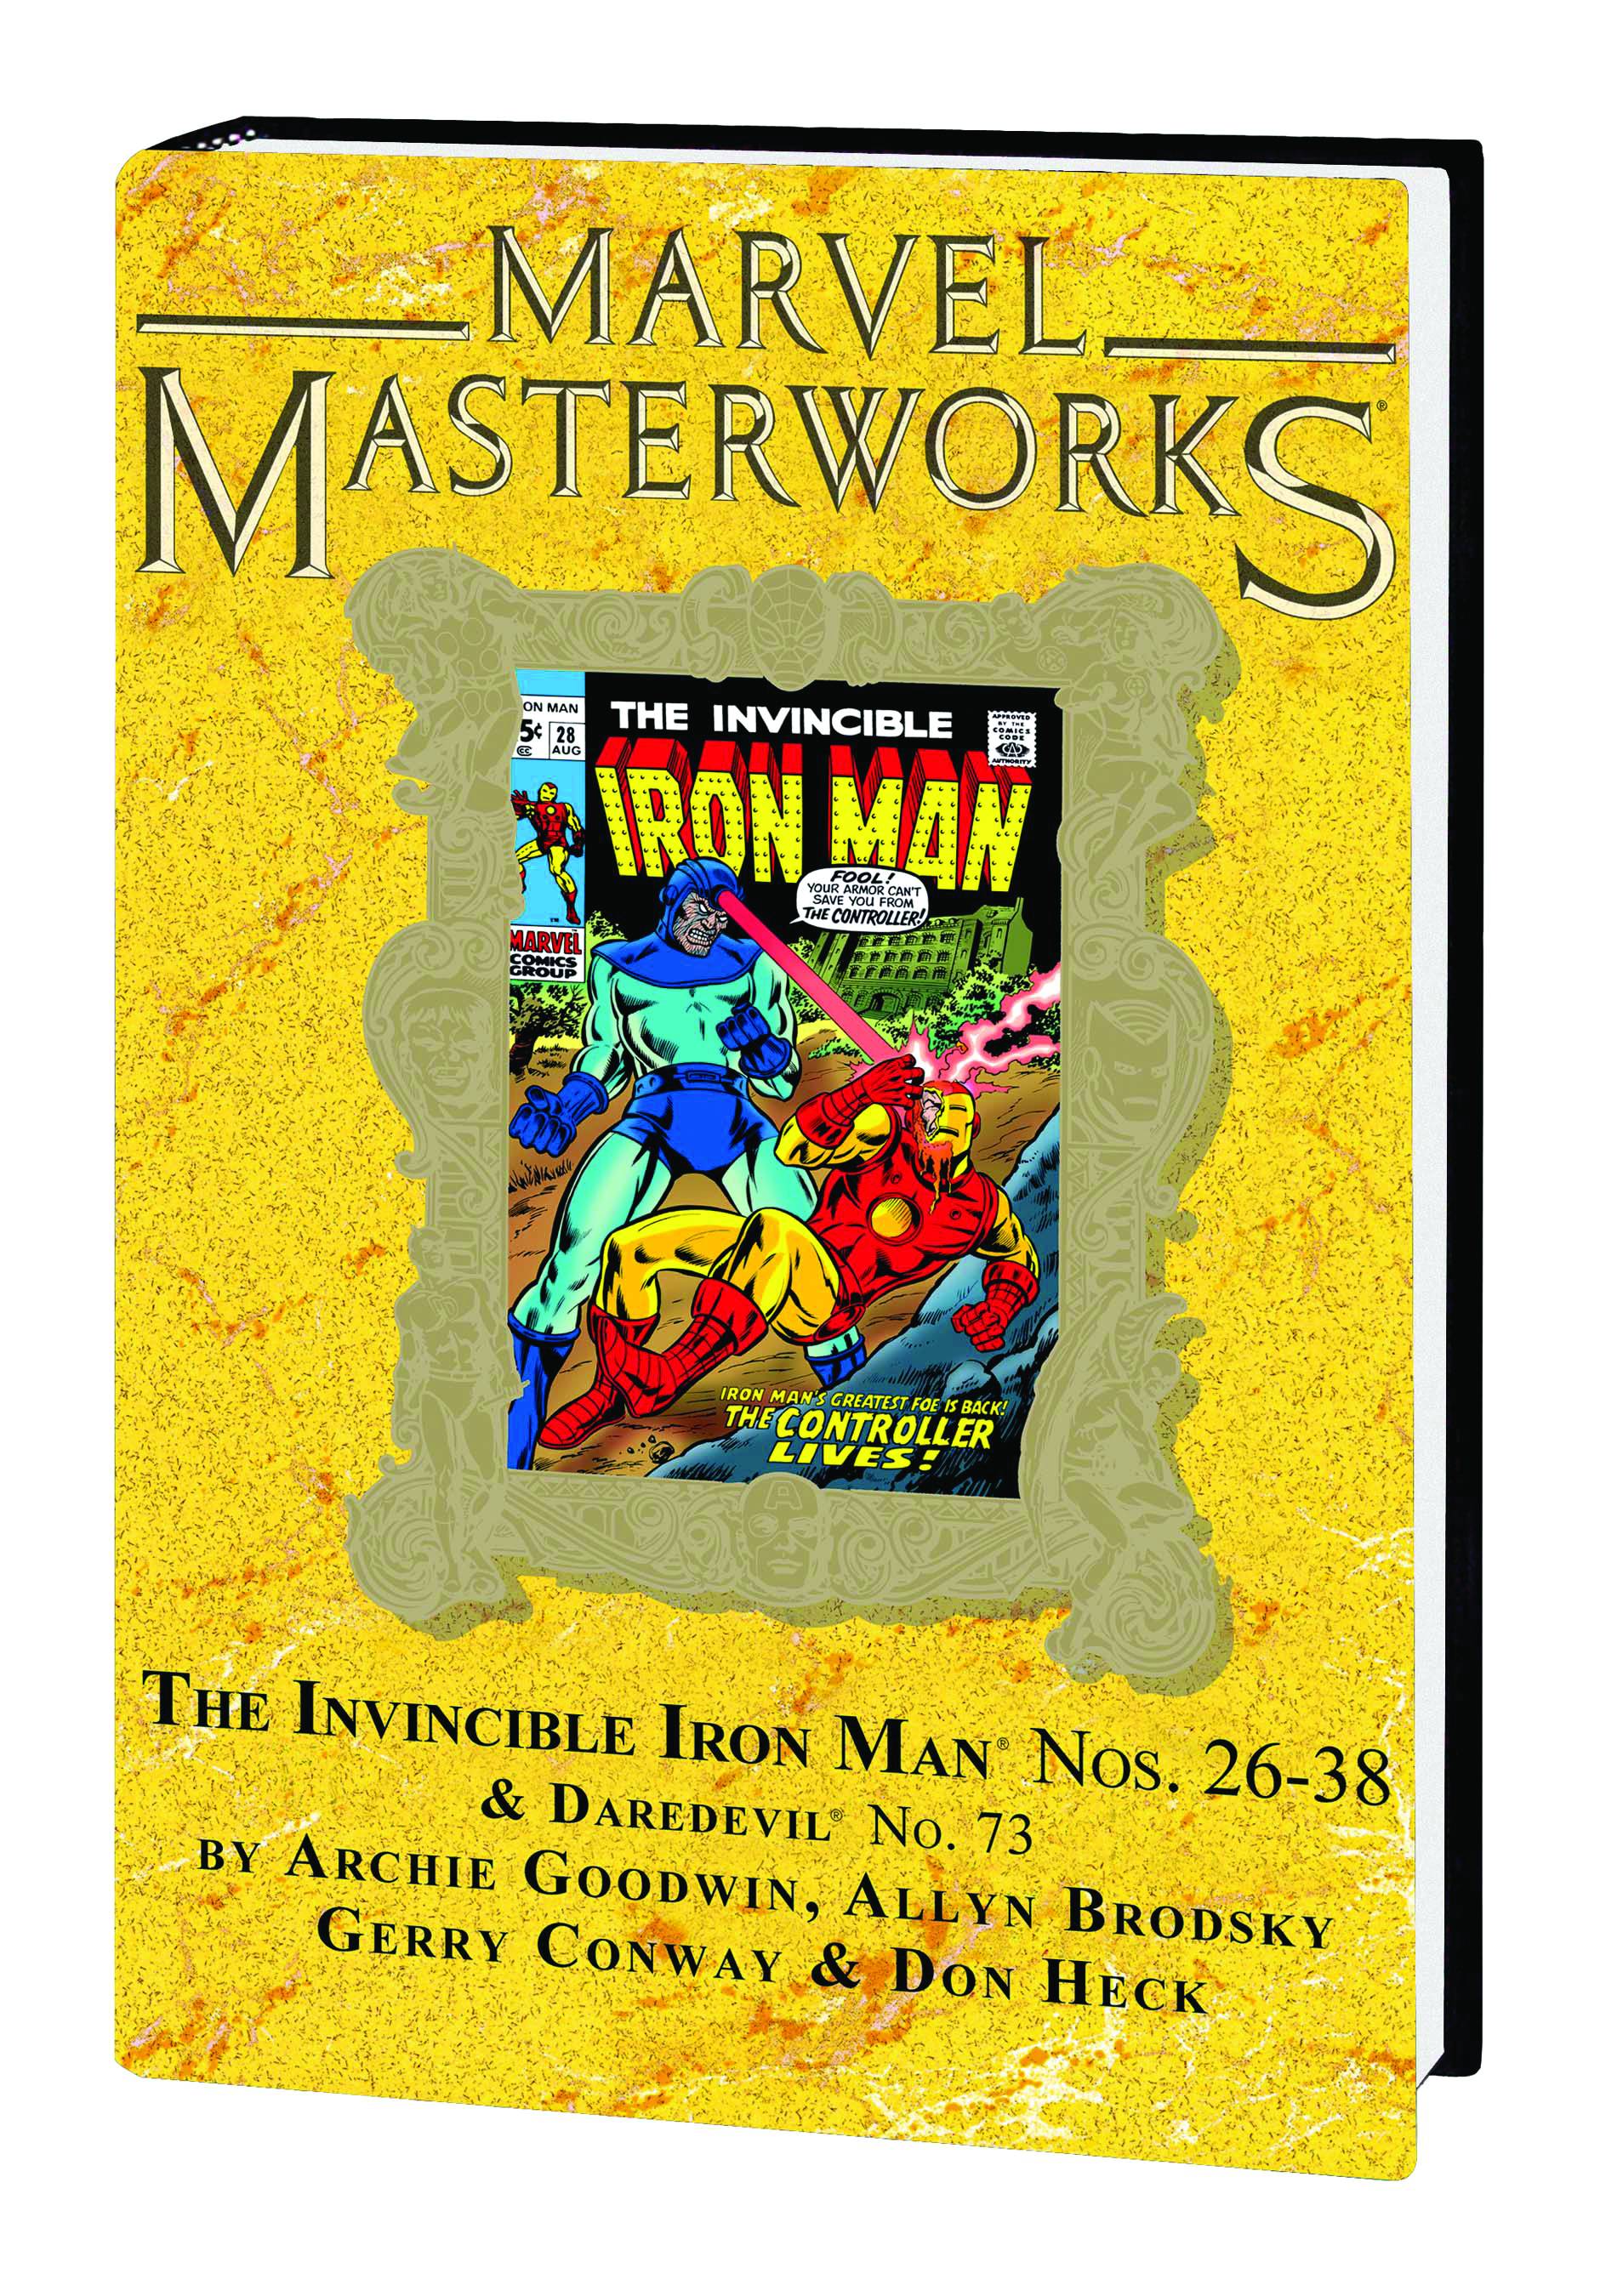 Marvel Masterworks Invincible Iron Man Hardcover Volume 7 Direct Market Edition 165